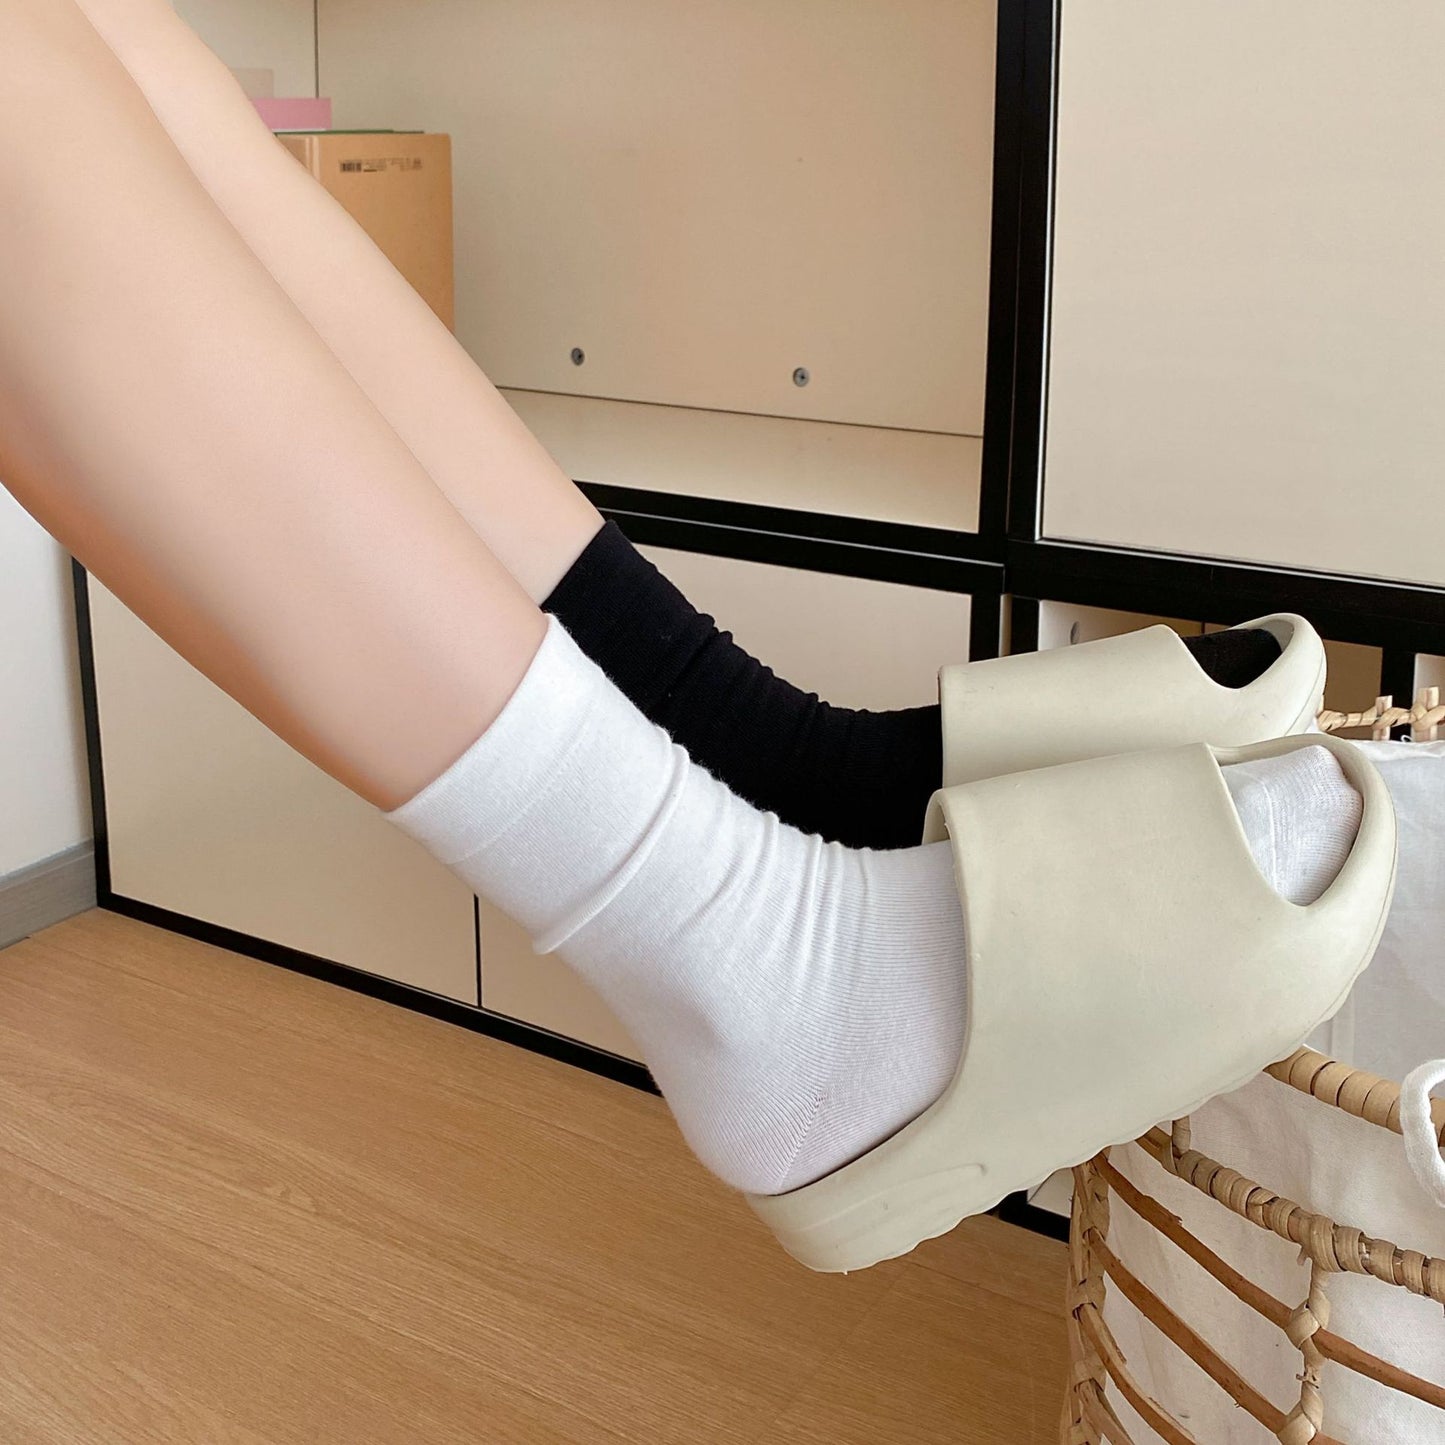 Women's Fashion Pure Cotton Mid-calf Length Socks